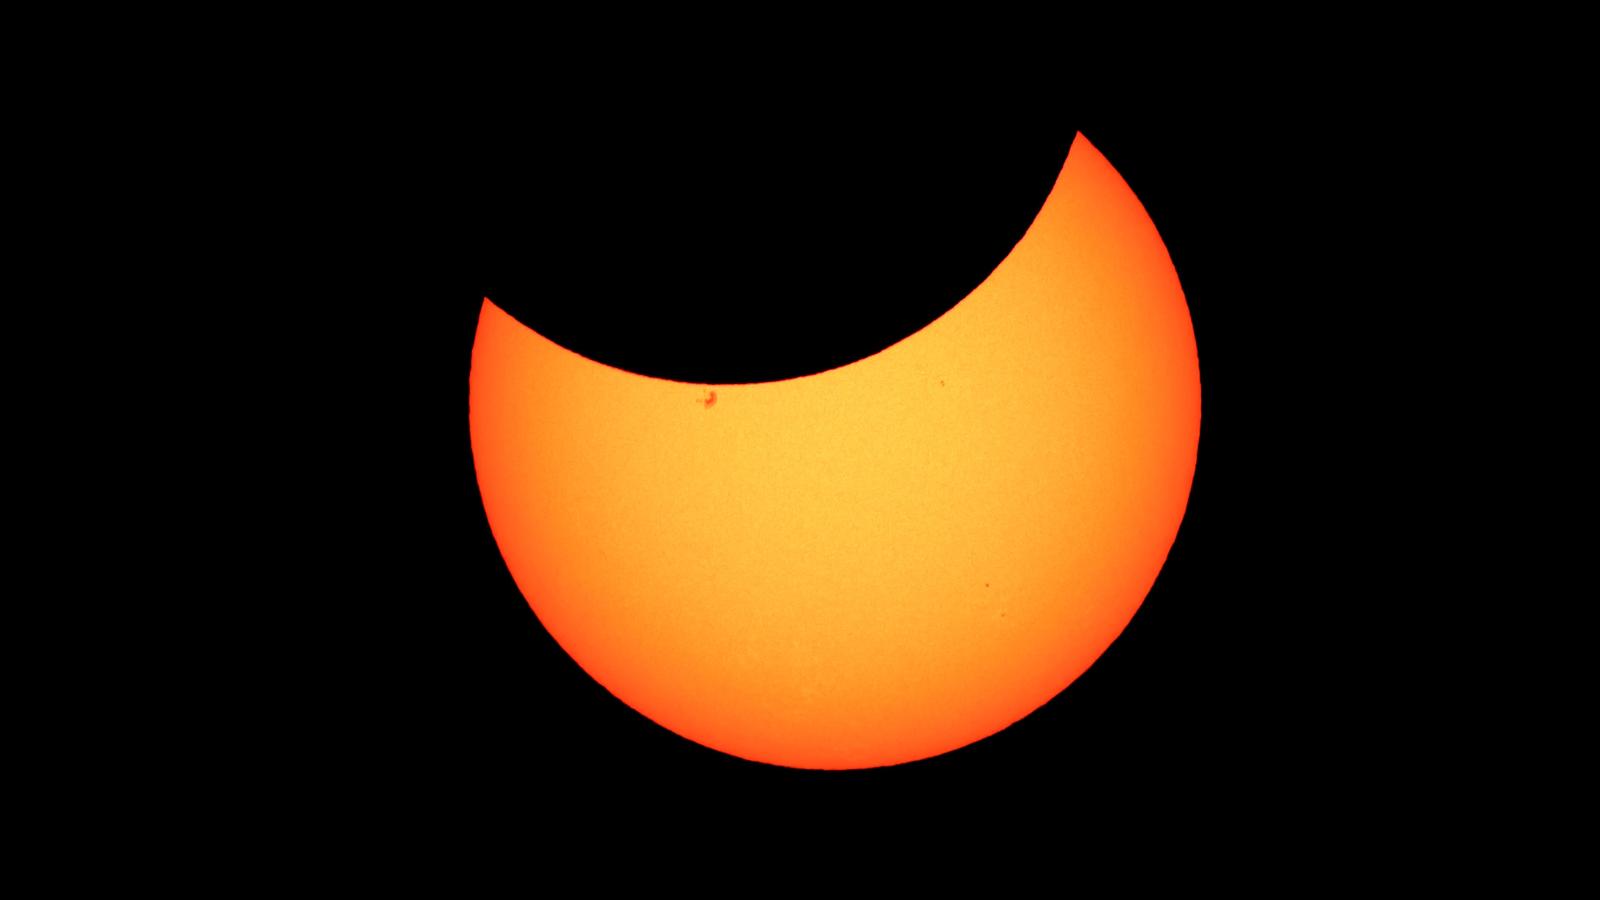 Lihat seperti apa gerhana matahari hibrida yang langka di Australia